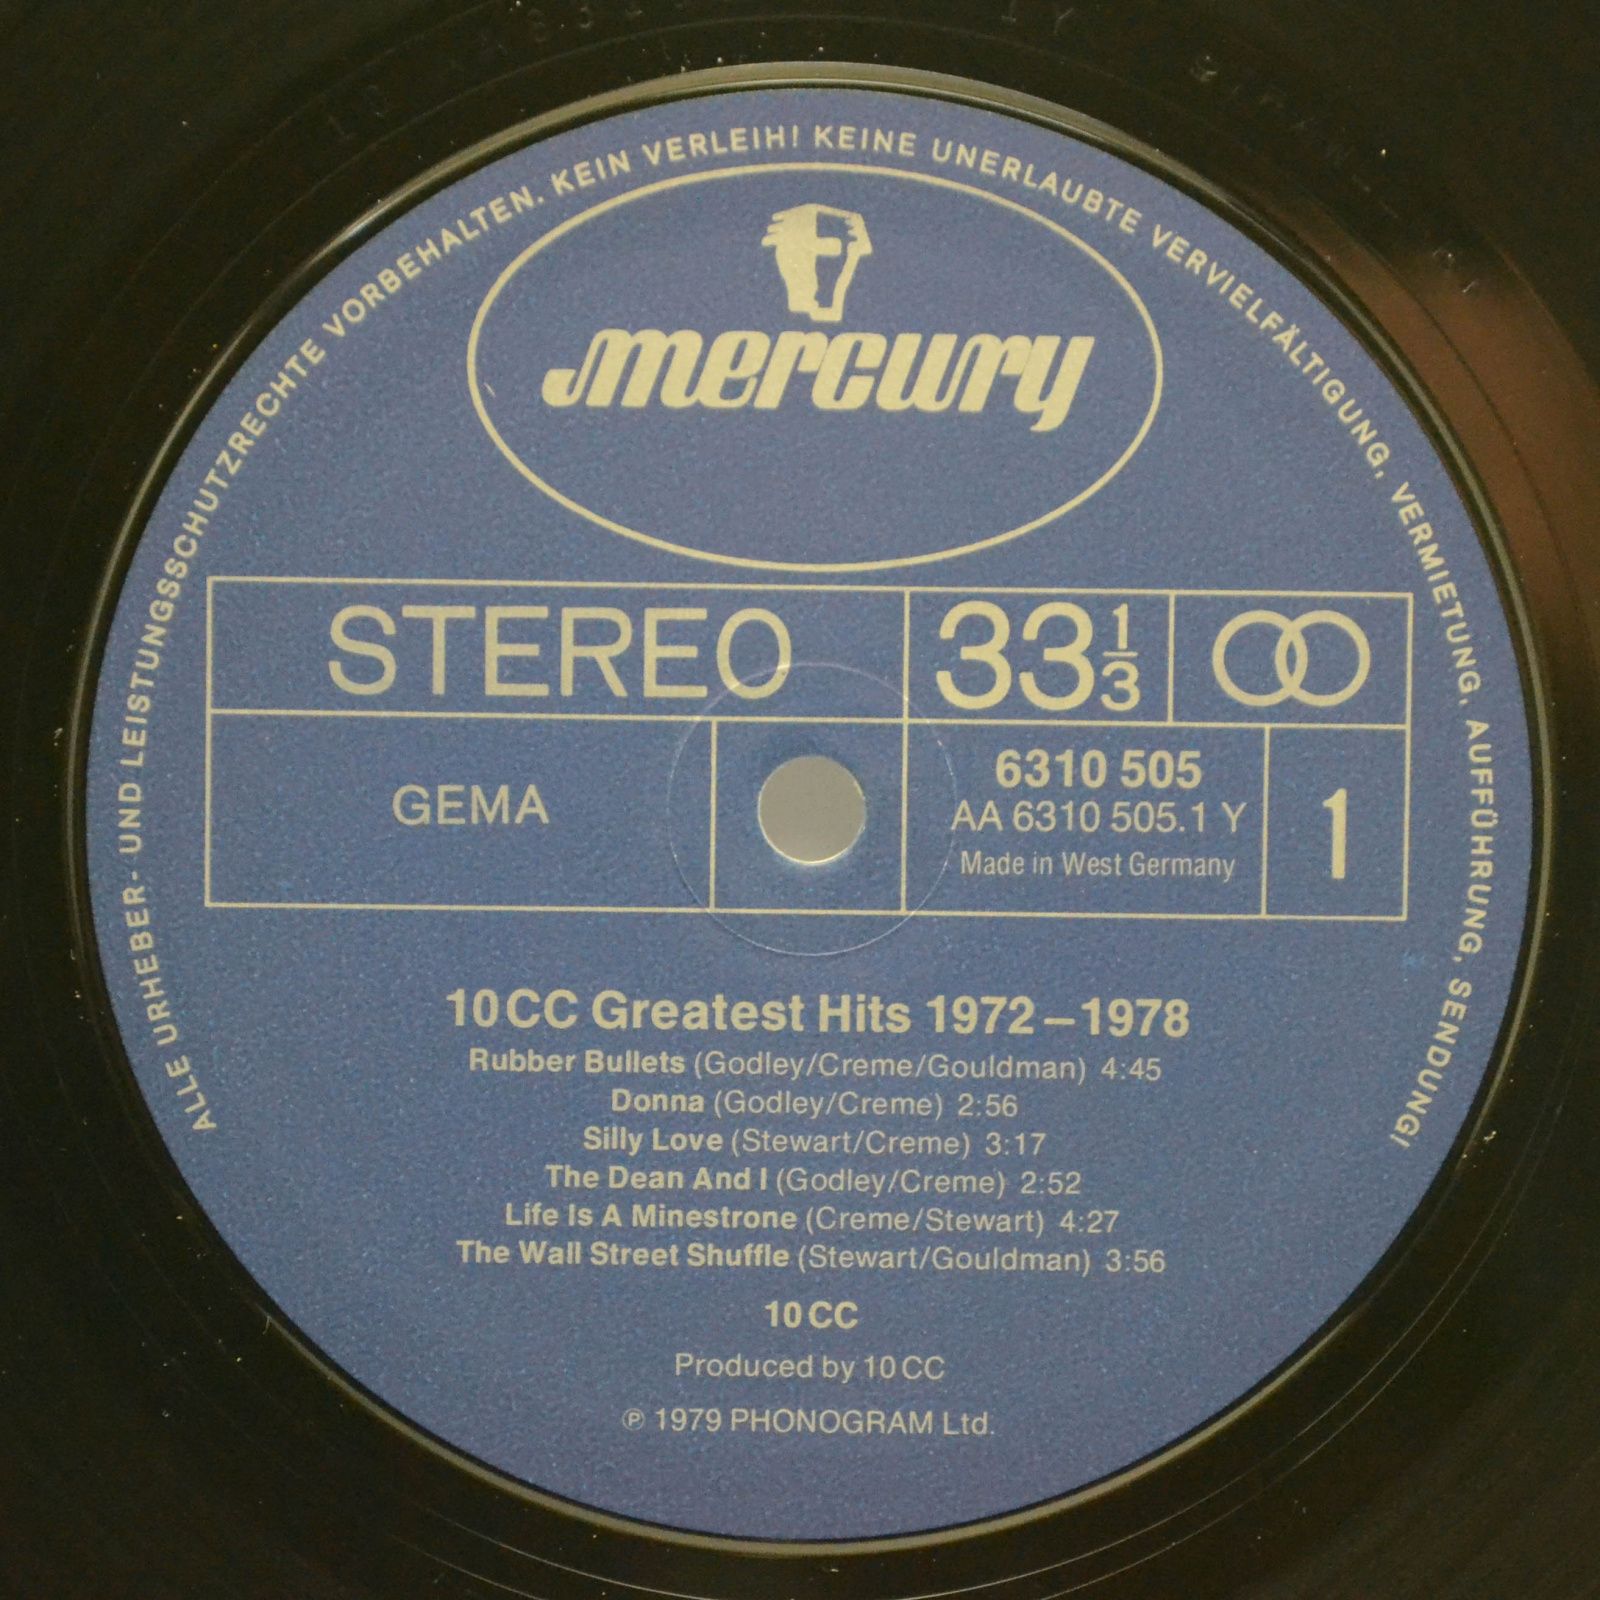 10cc — Greatest Hits 1972-1978, 1979